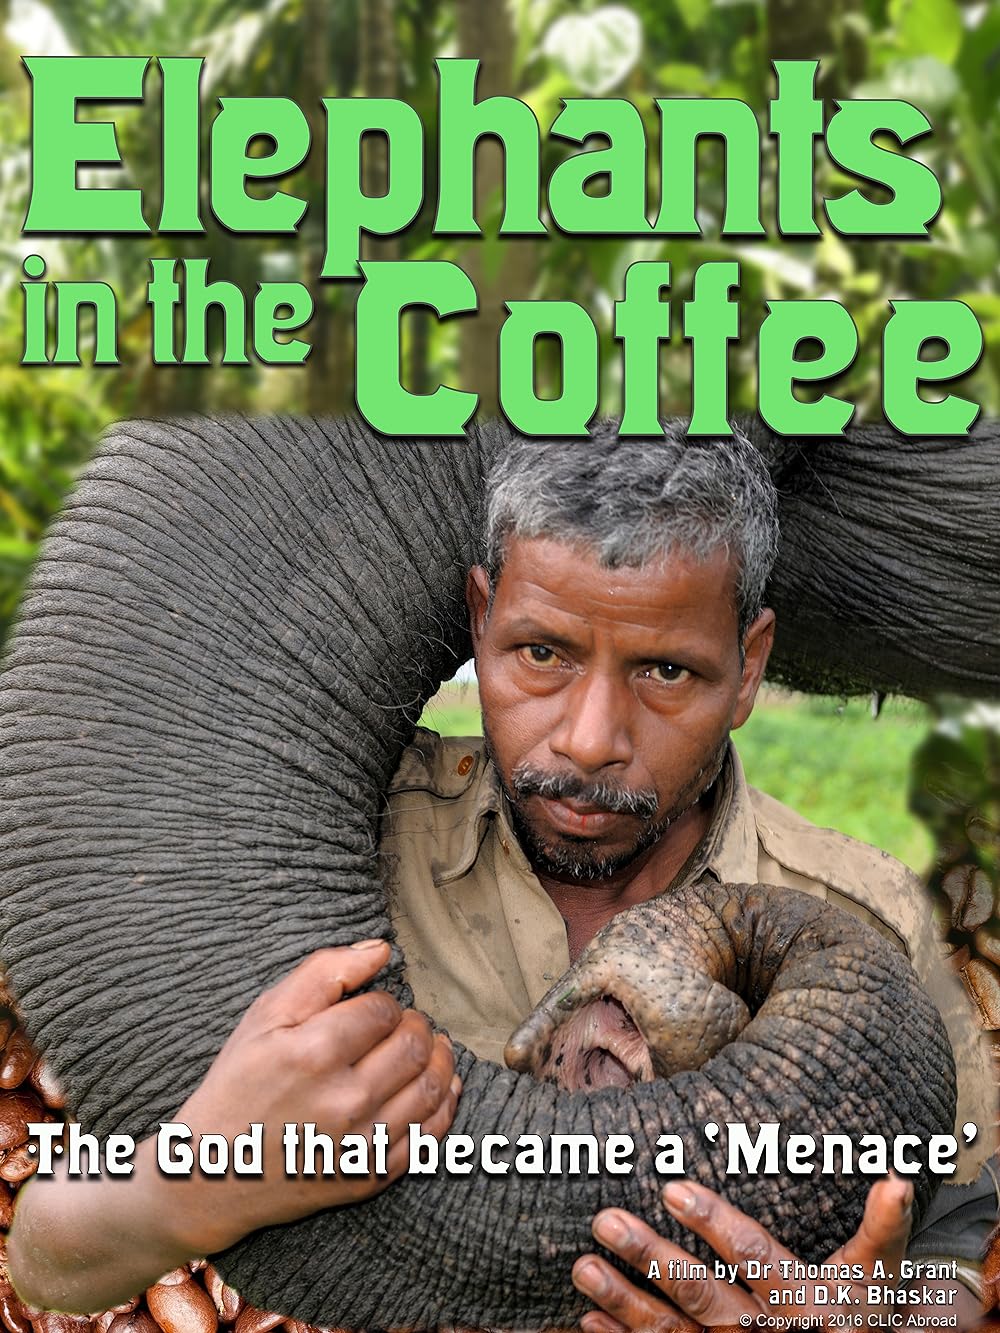 Award winning documentary Elephants in the Coffee